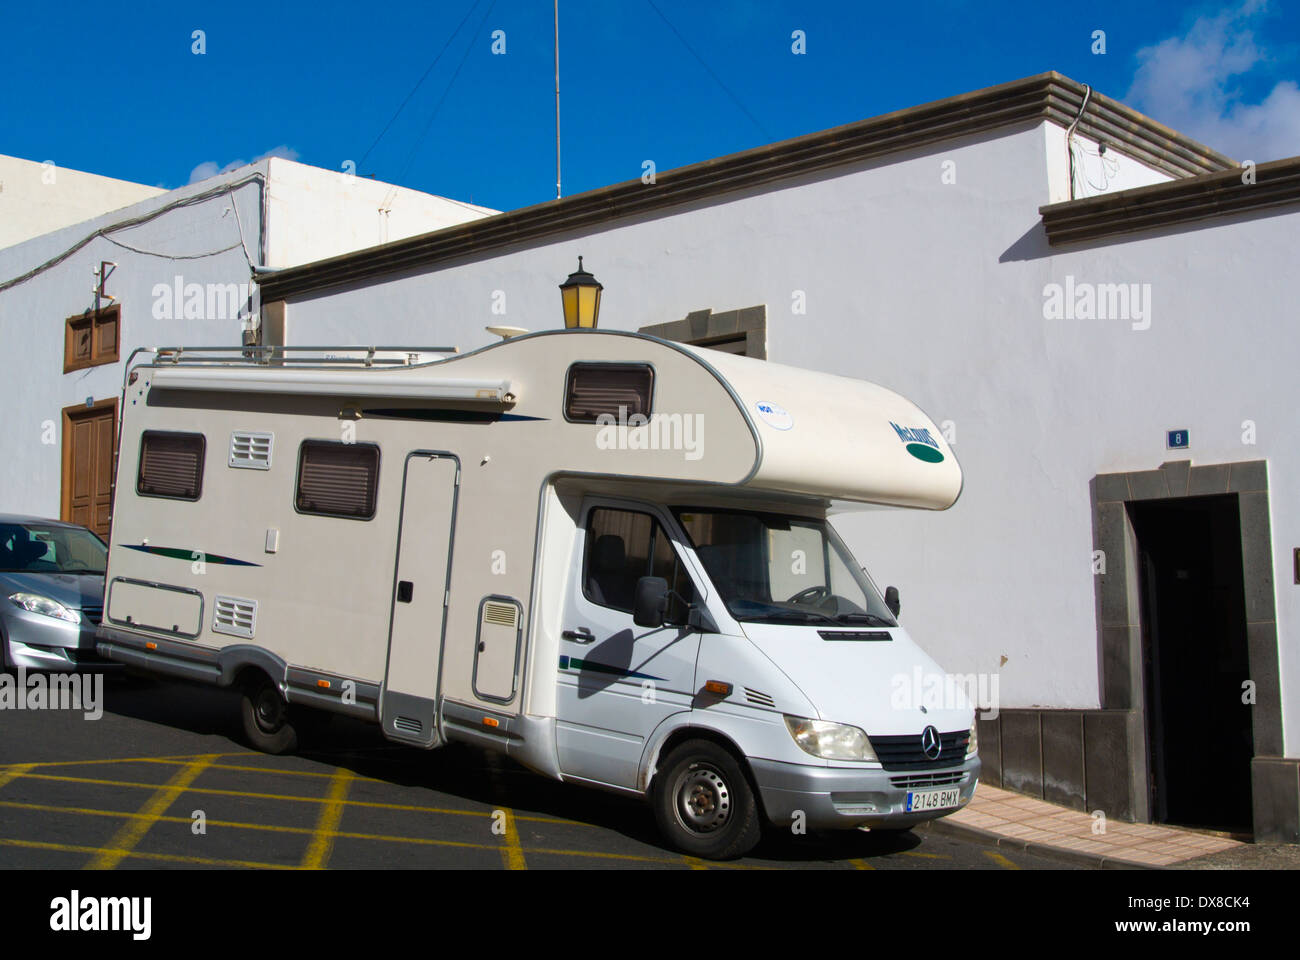 RV recreational vehicle motorhome campervan, Puerto del Rosario, Fuerteventura, Canary Islands, Spain, Europe Stock Photo